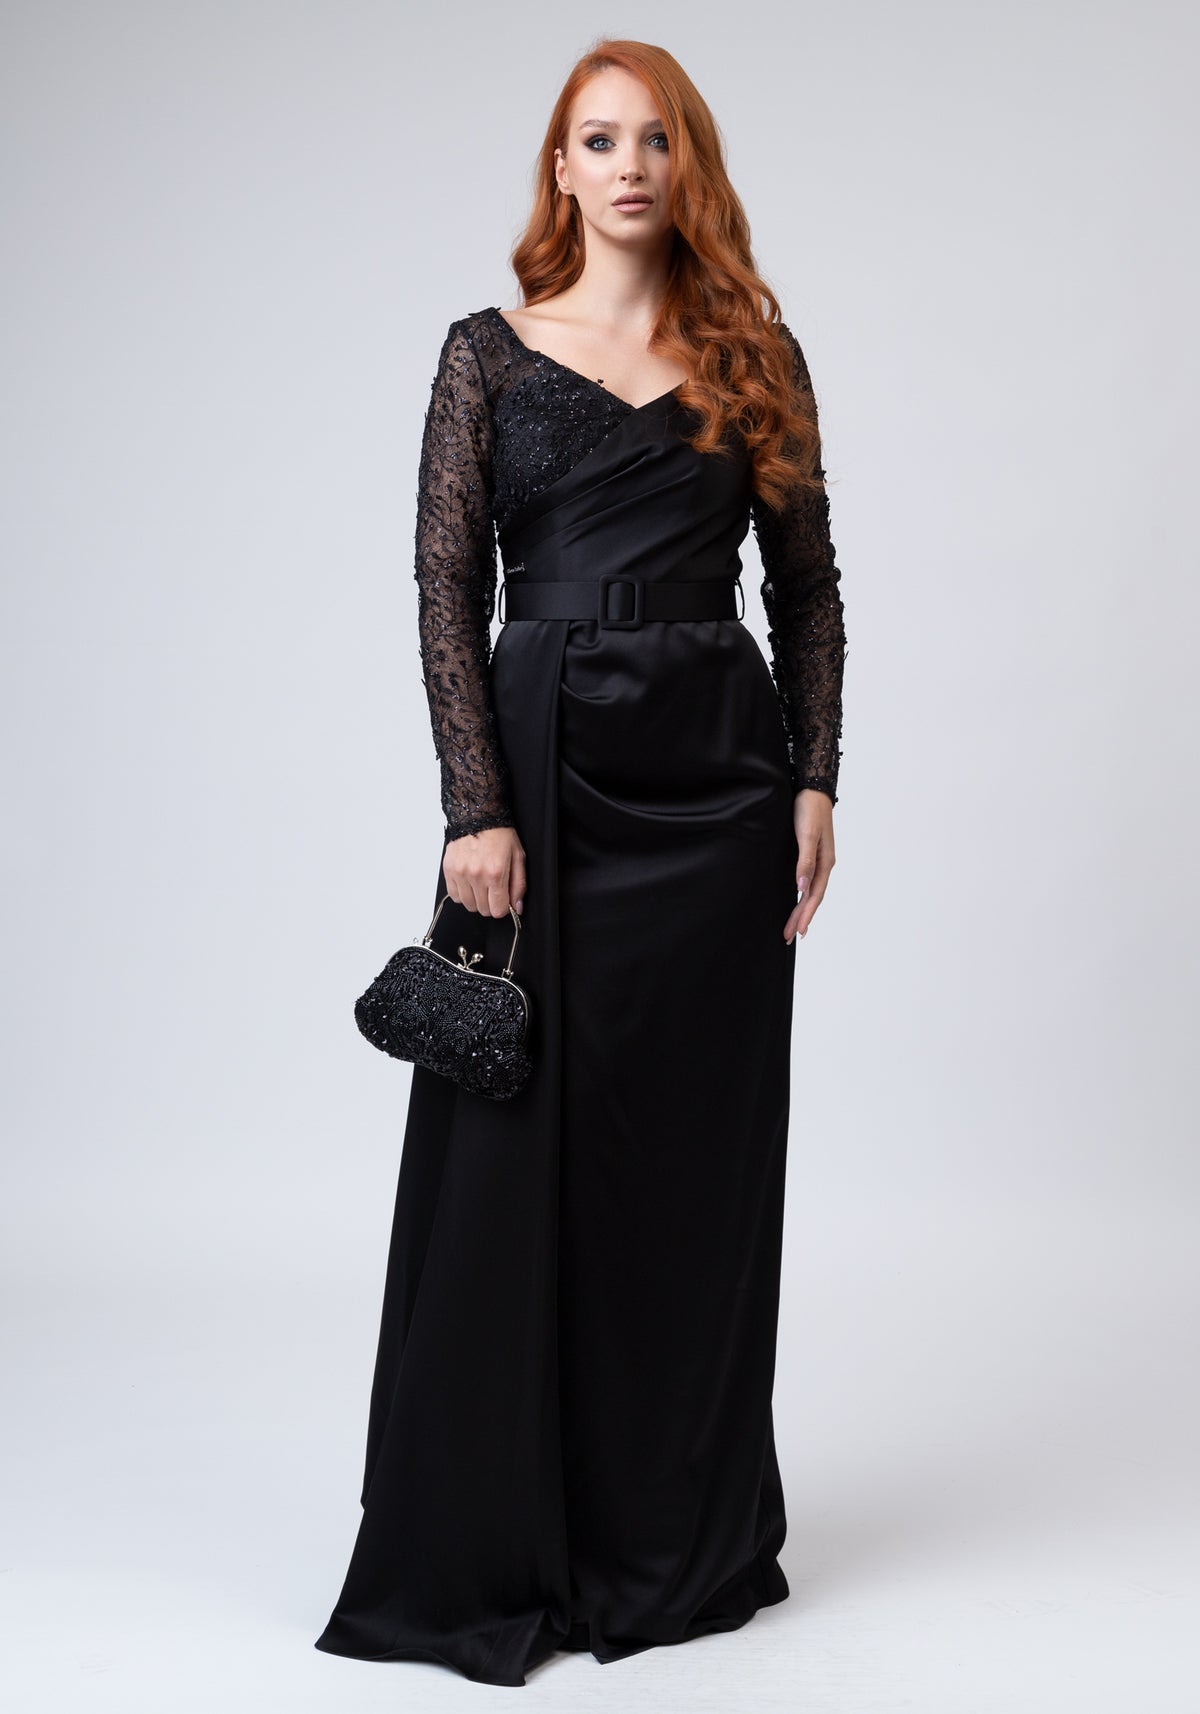 Black luxury dress